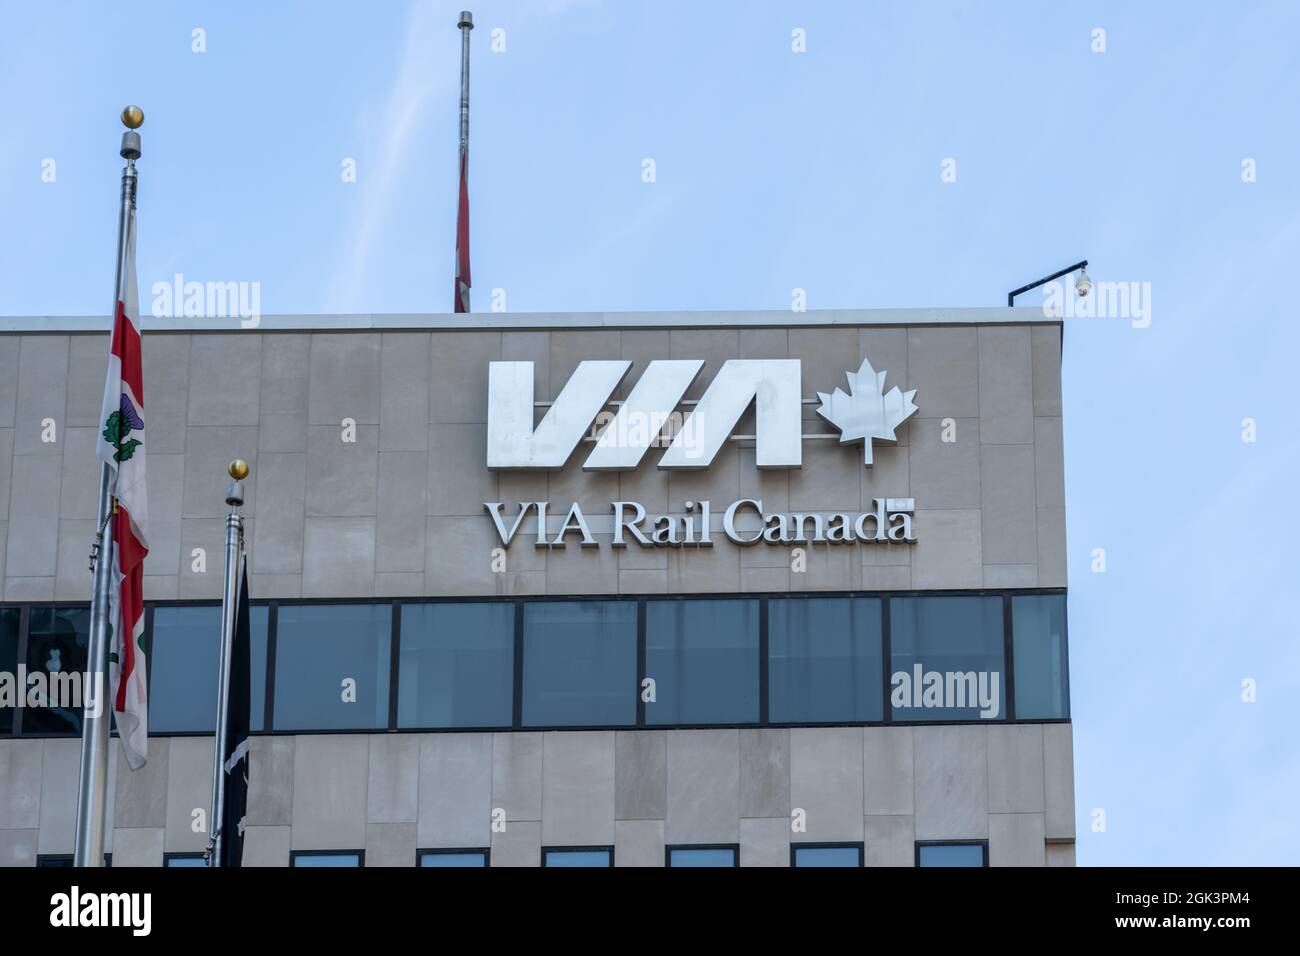 Montreal, QC, Kanada - 4. September 2021: Nahaufnahme des VIA Rail Canada-Zeichens am Hauptsitz in Montreal, QC, Kanada. Stockfoto